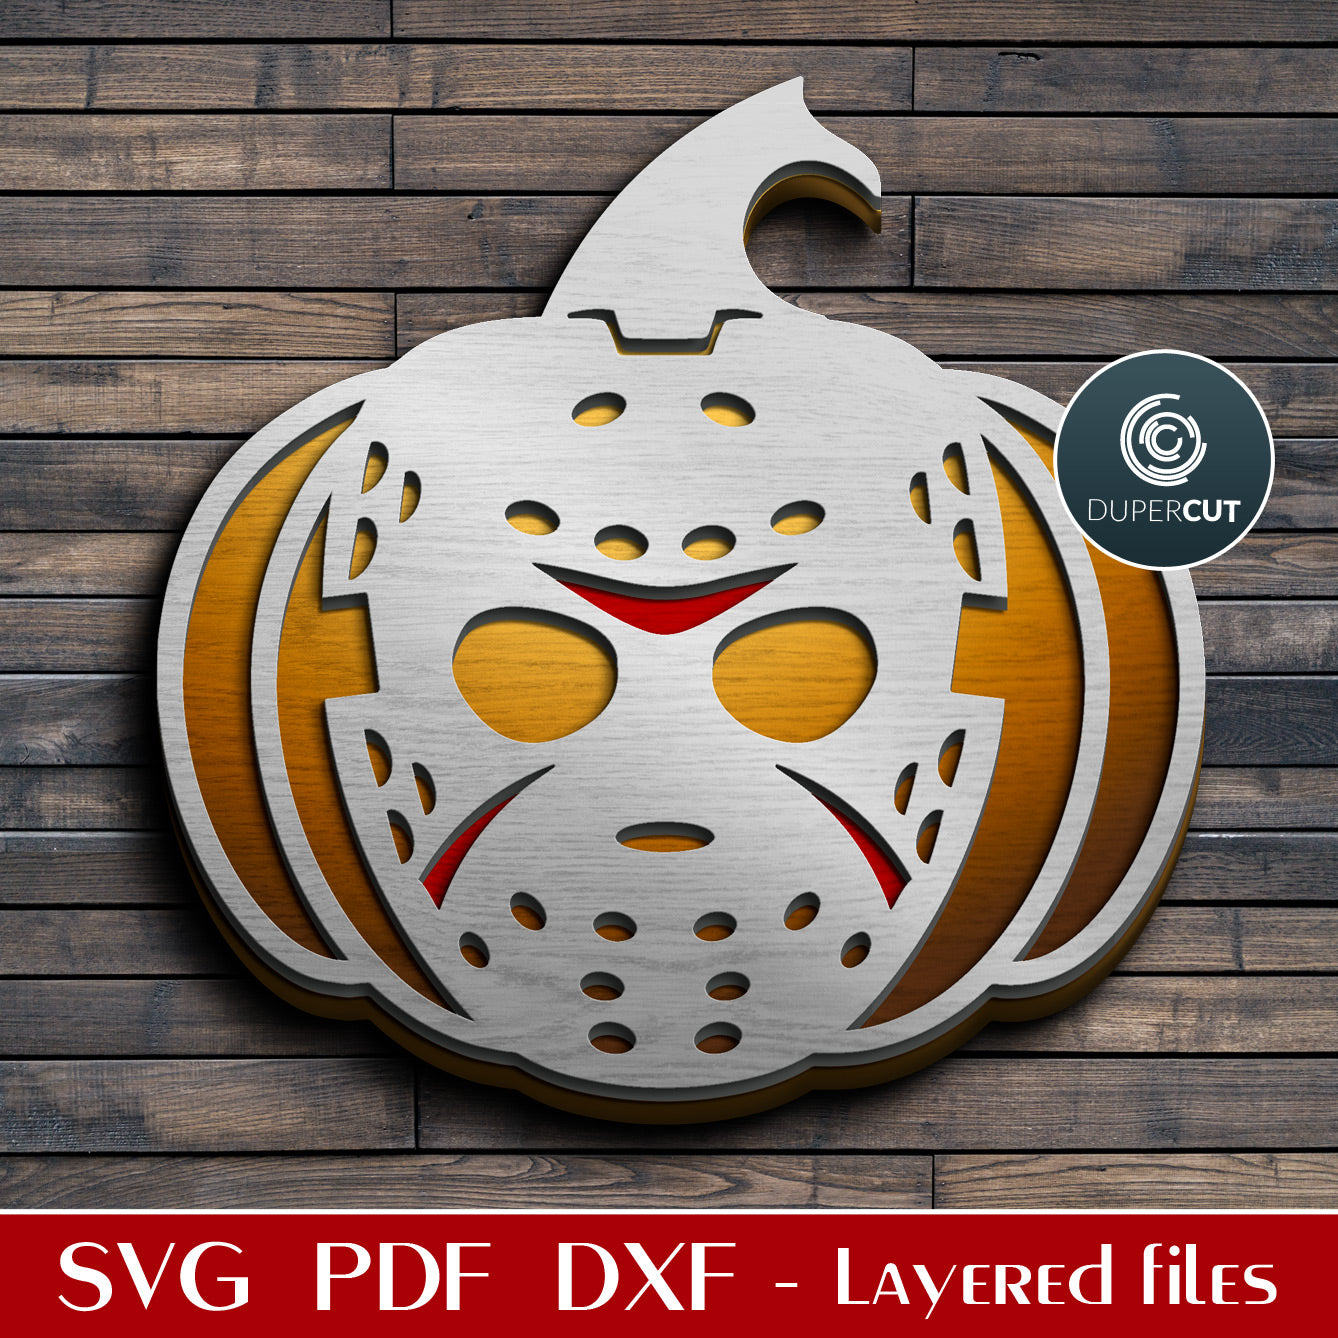 Jason hockey mask pumpkin Halloween decoration - SVG PNG DXF vector laser cutting files for Cricut, Glowforge, Silhouette, CNC plasma machines by DuperCut